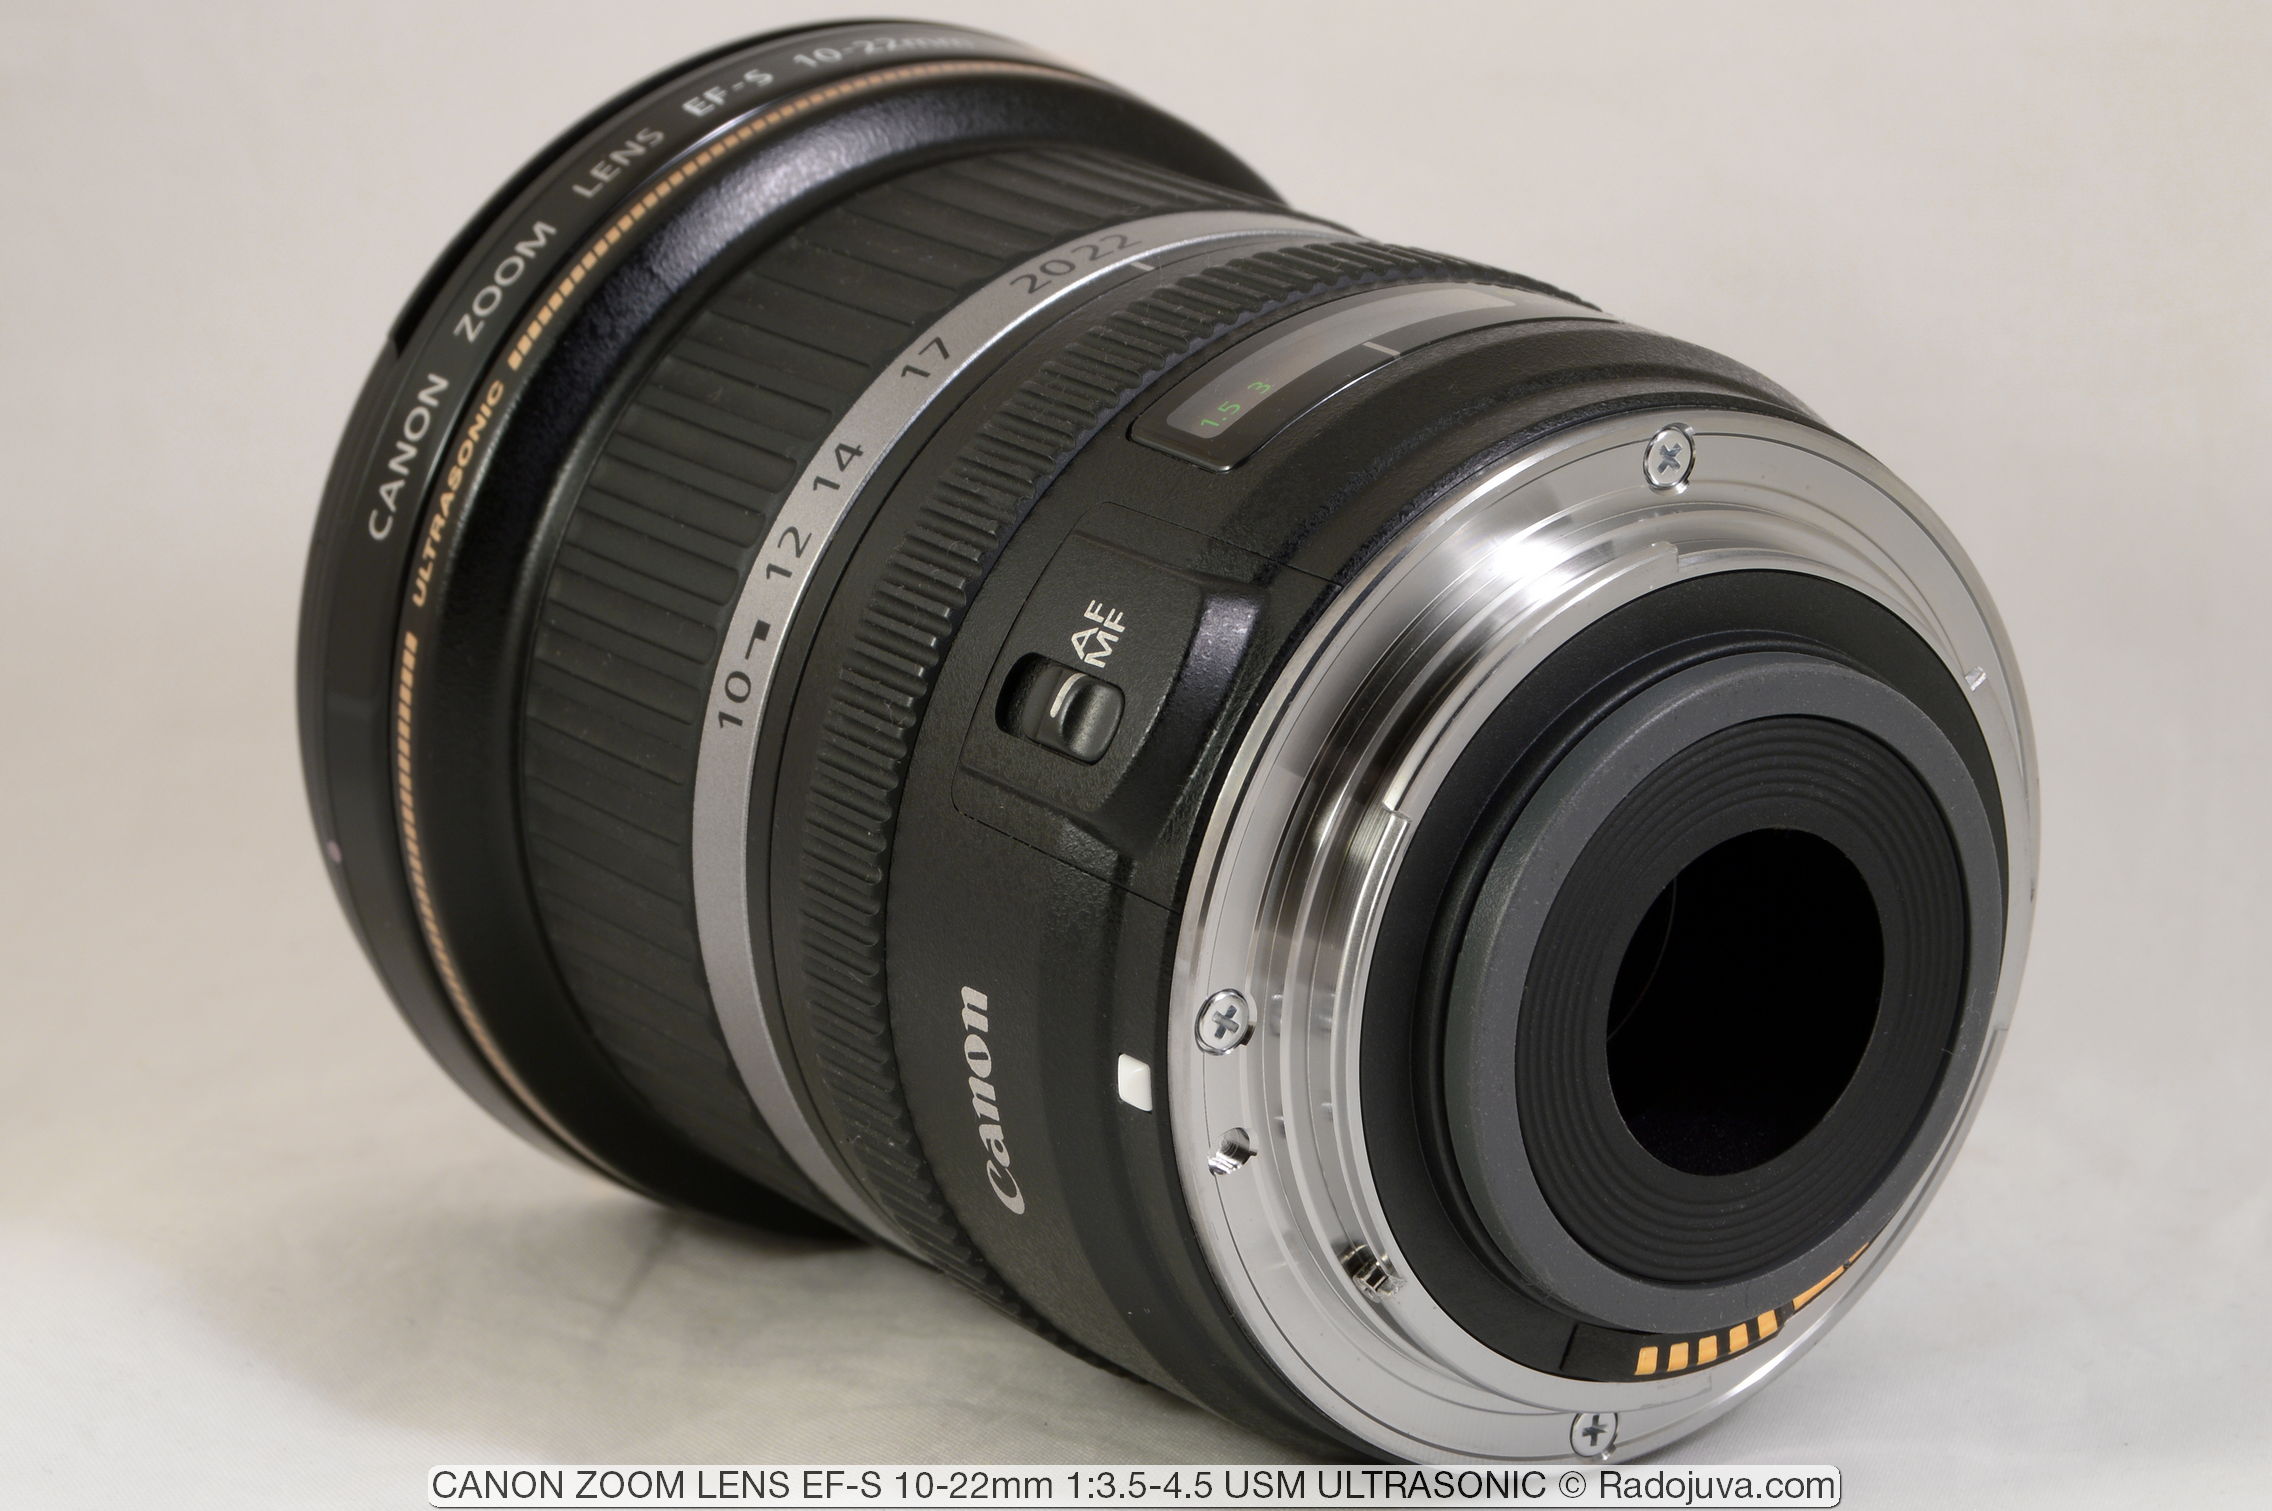 Canon Zoom Lens EF-S 10-22mm 1:3.5-4.5 USM ULTRASONICO